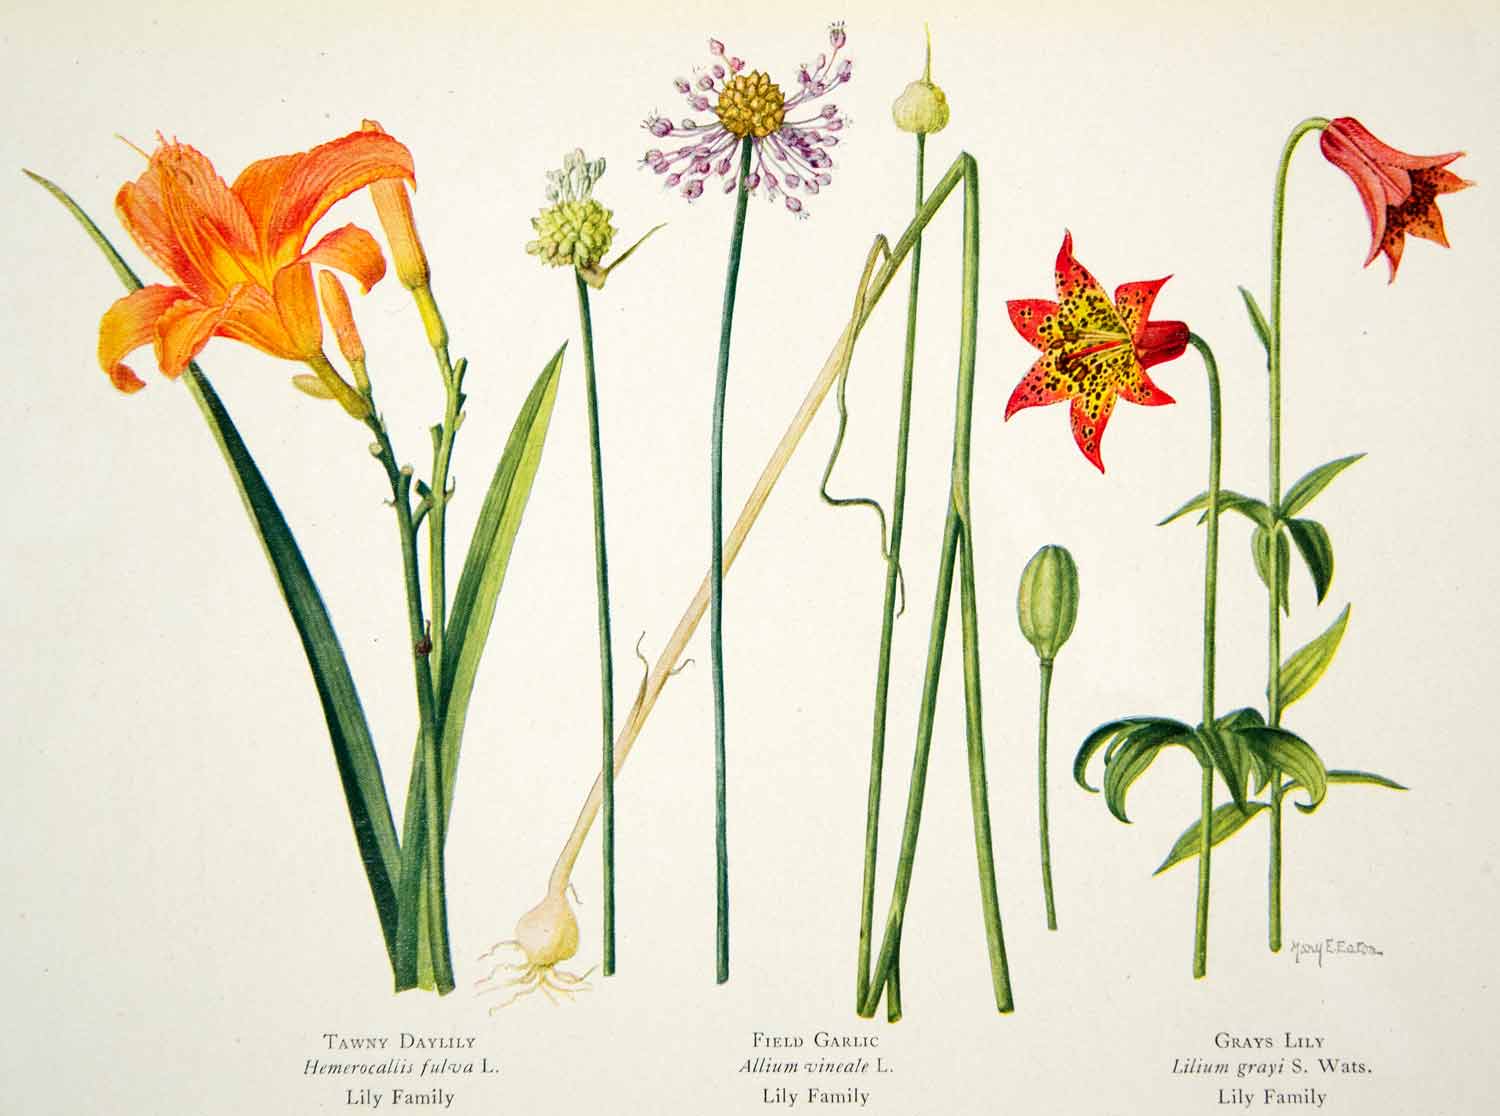 1924 Color Print Flowers Tawny Daylily Field Garlic Grays Lily Plants NGMA1